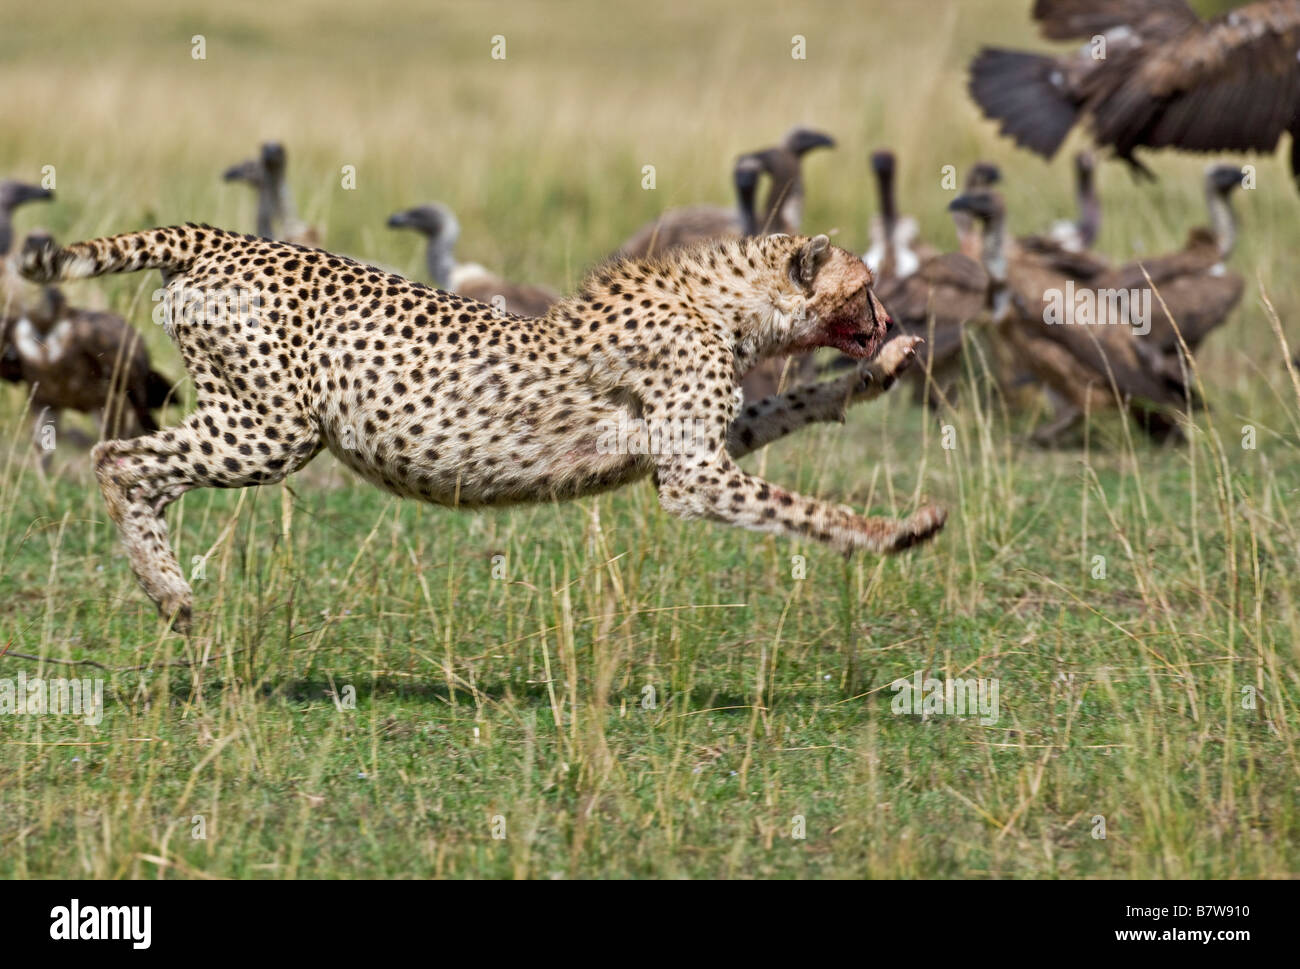 Kenya, Masai Mara. A cheetah sees off vultures which encroach on its kill in the Masai Mara National Reserve Stock Photo